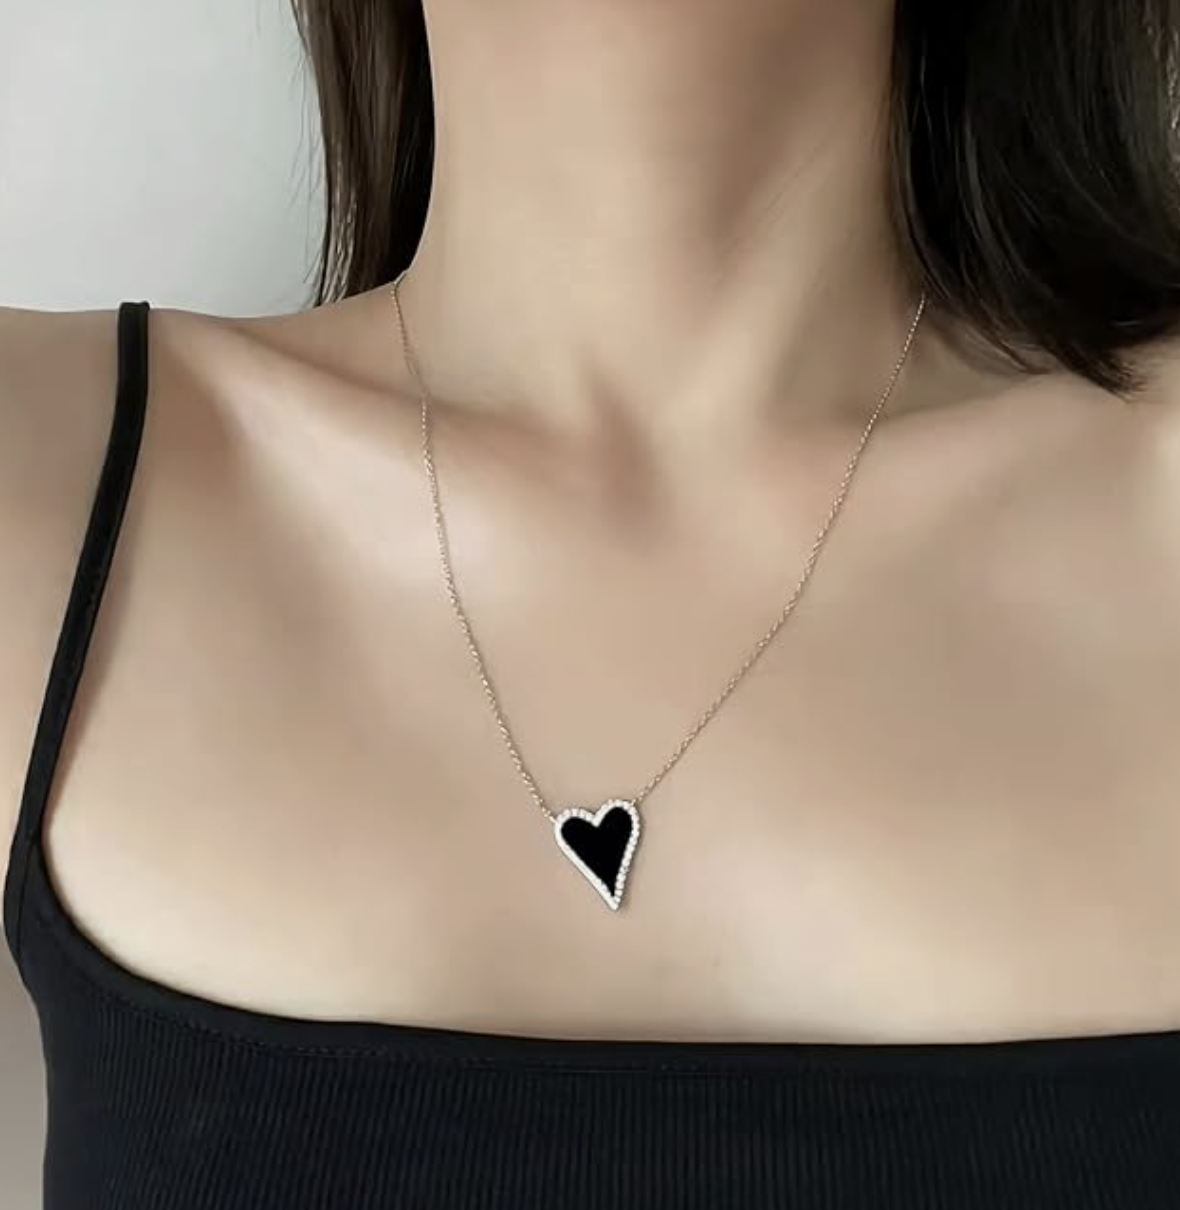 Black Heart Necklace, $13